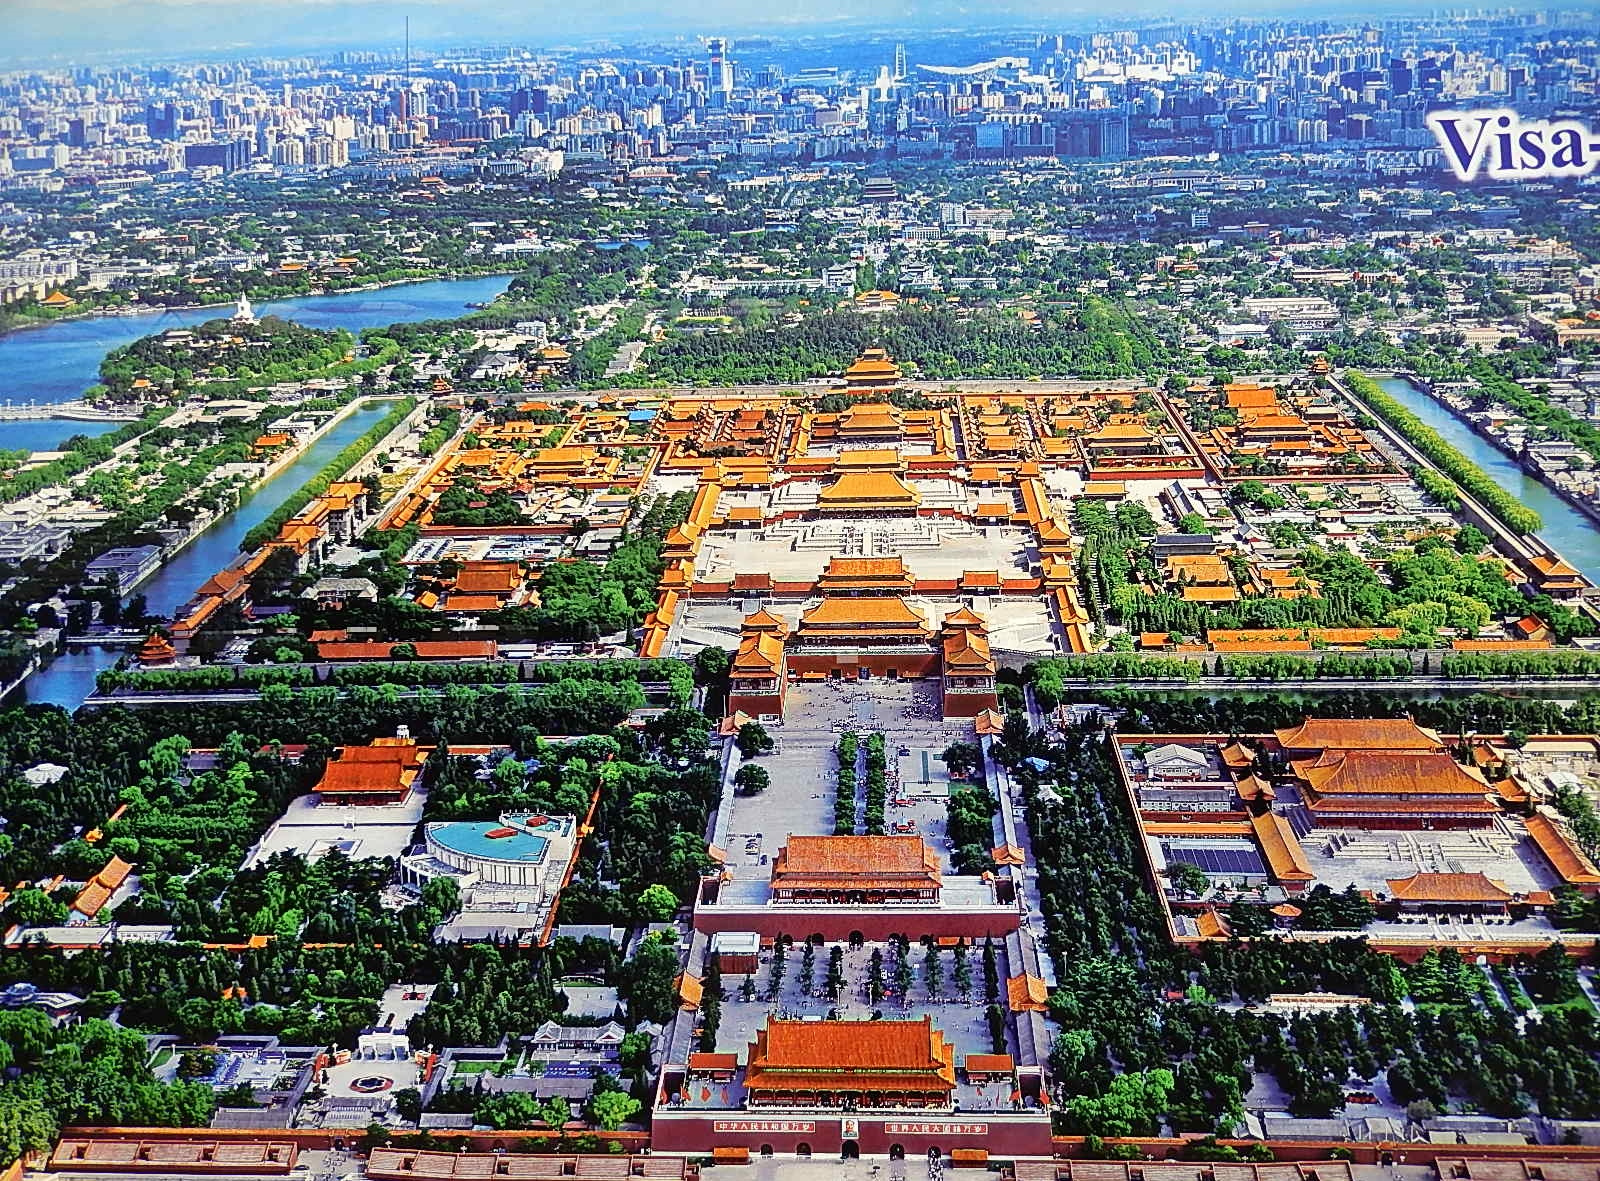 “Forbidden City” – World Cultural Heritage